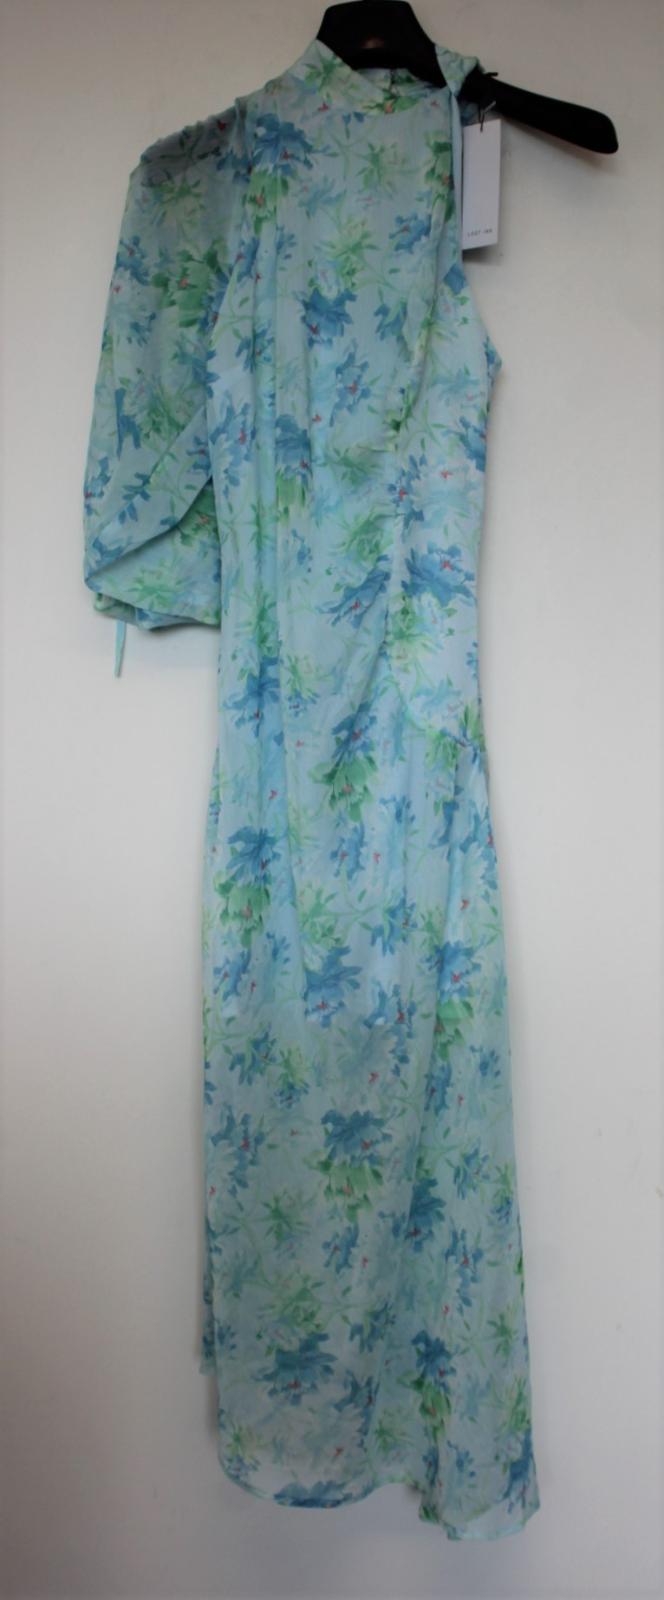 LOST INK Ladies Blue & Green Floral Print One-Shoulder Dress Size UK10 NEW